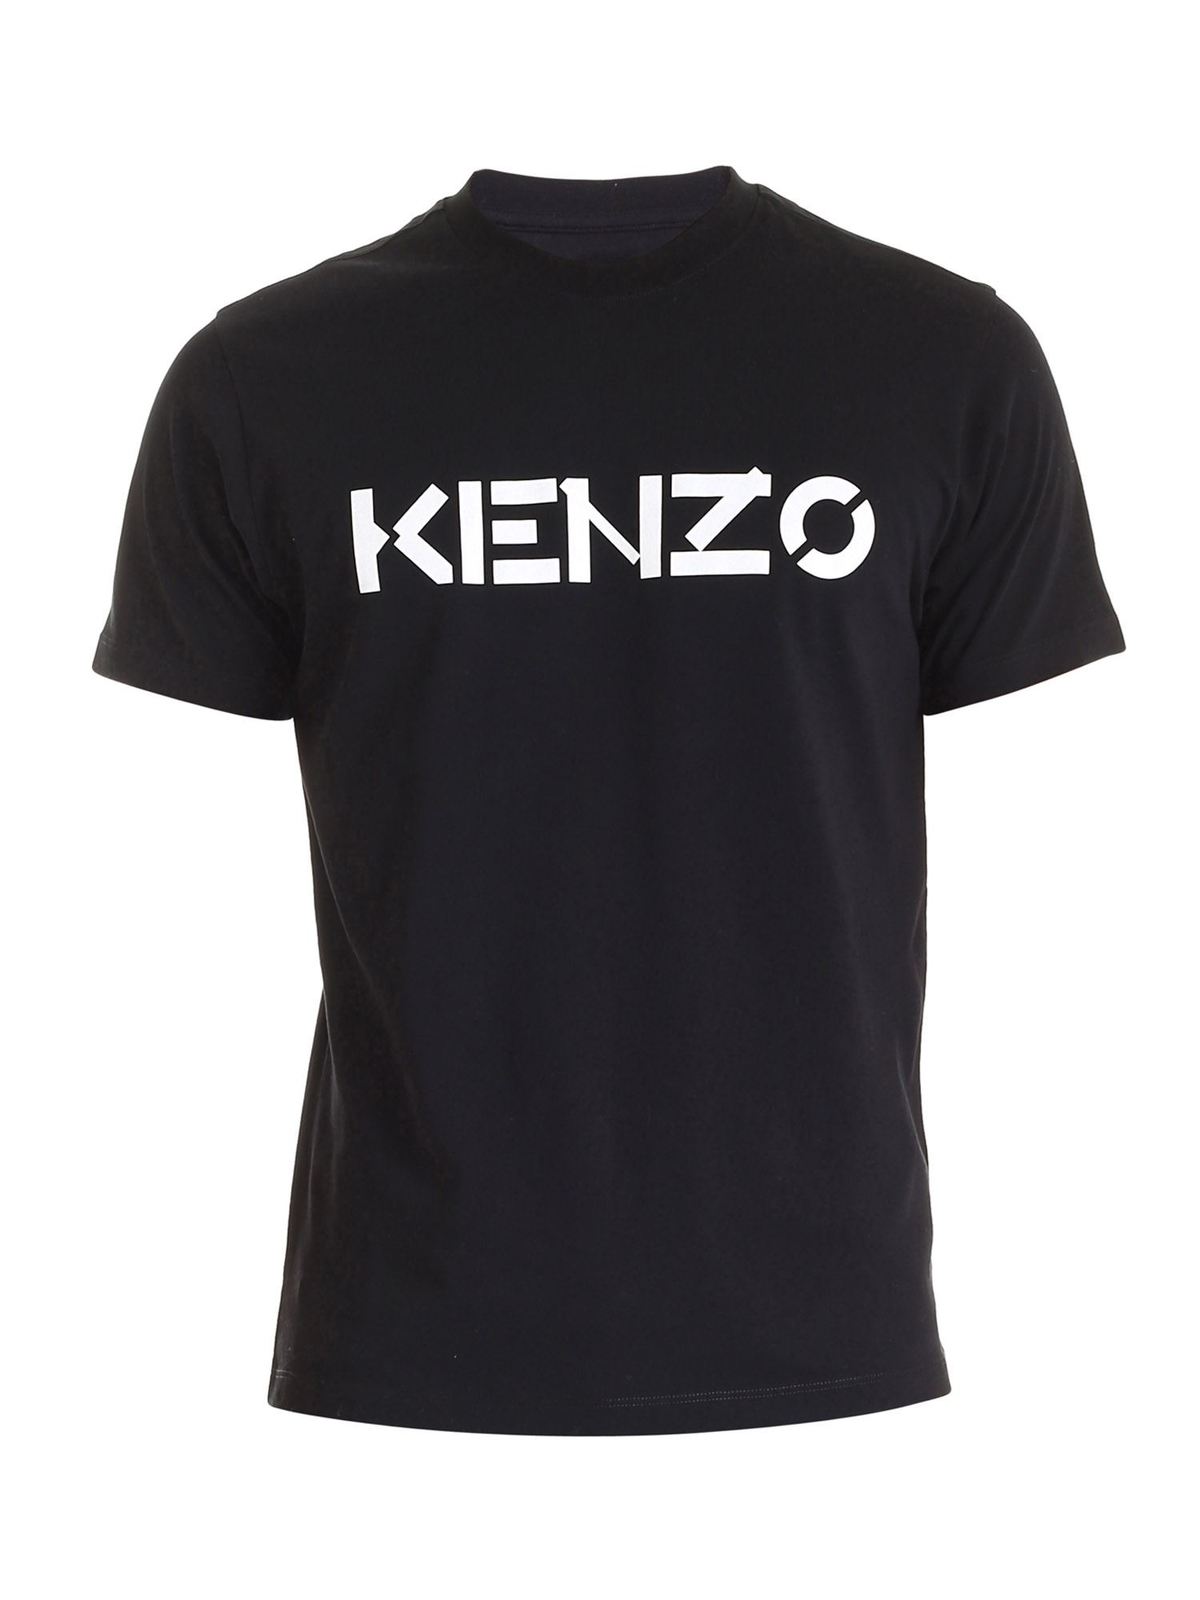 black and white kenzo t shirt